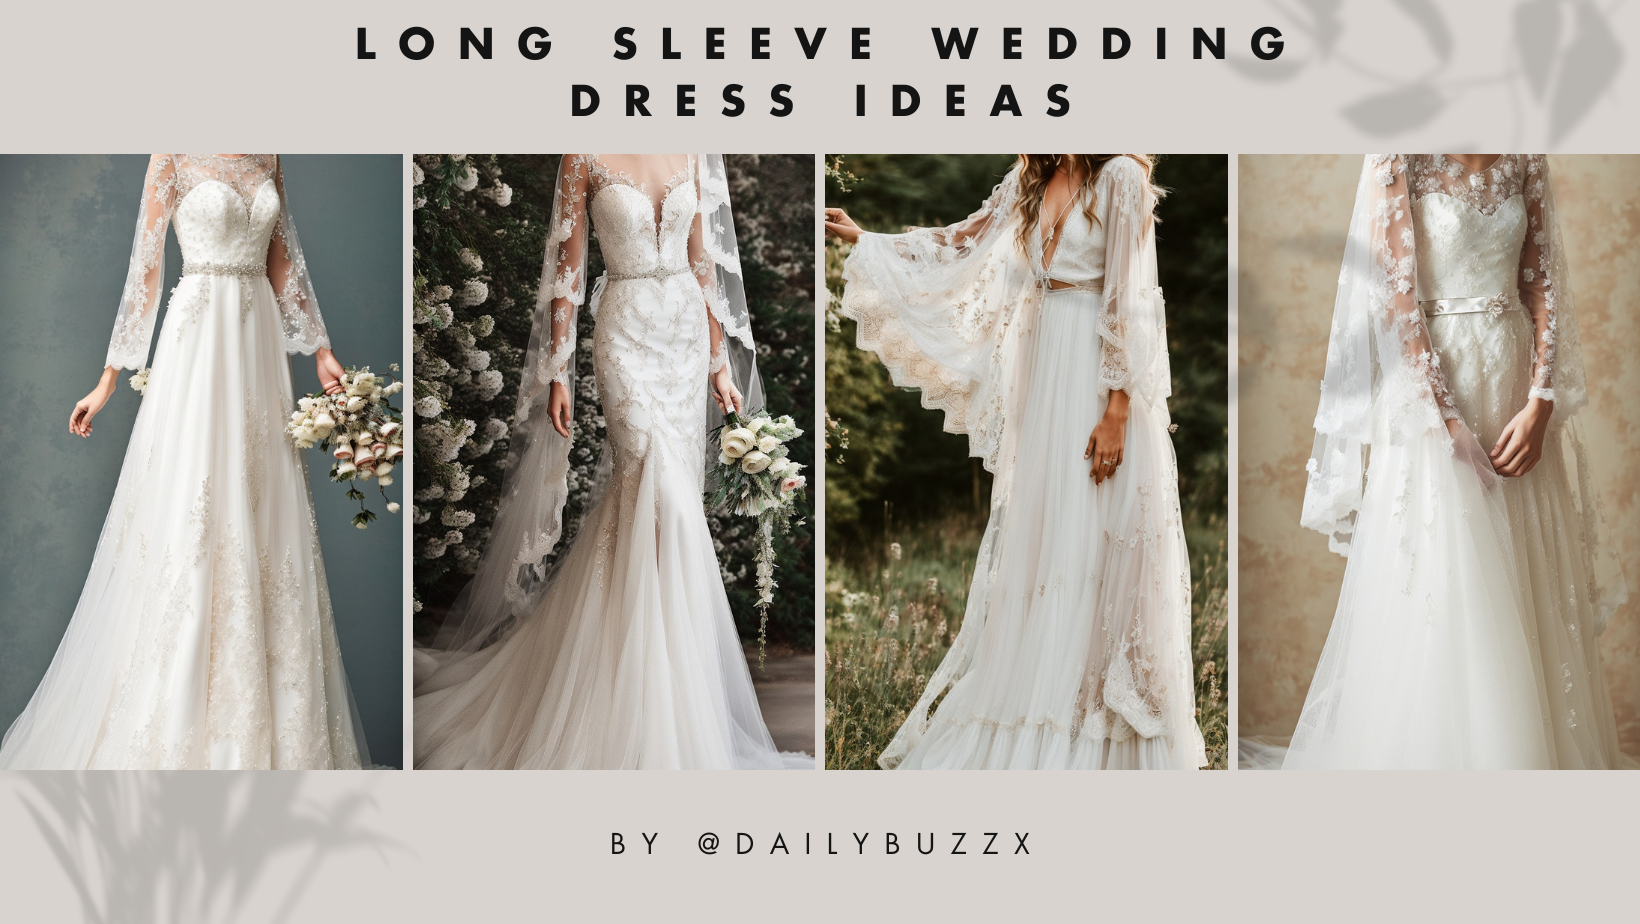 20 Long Sleeve Wedding Dress Ideas That Define Timeless Beauty